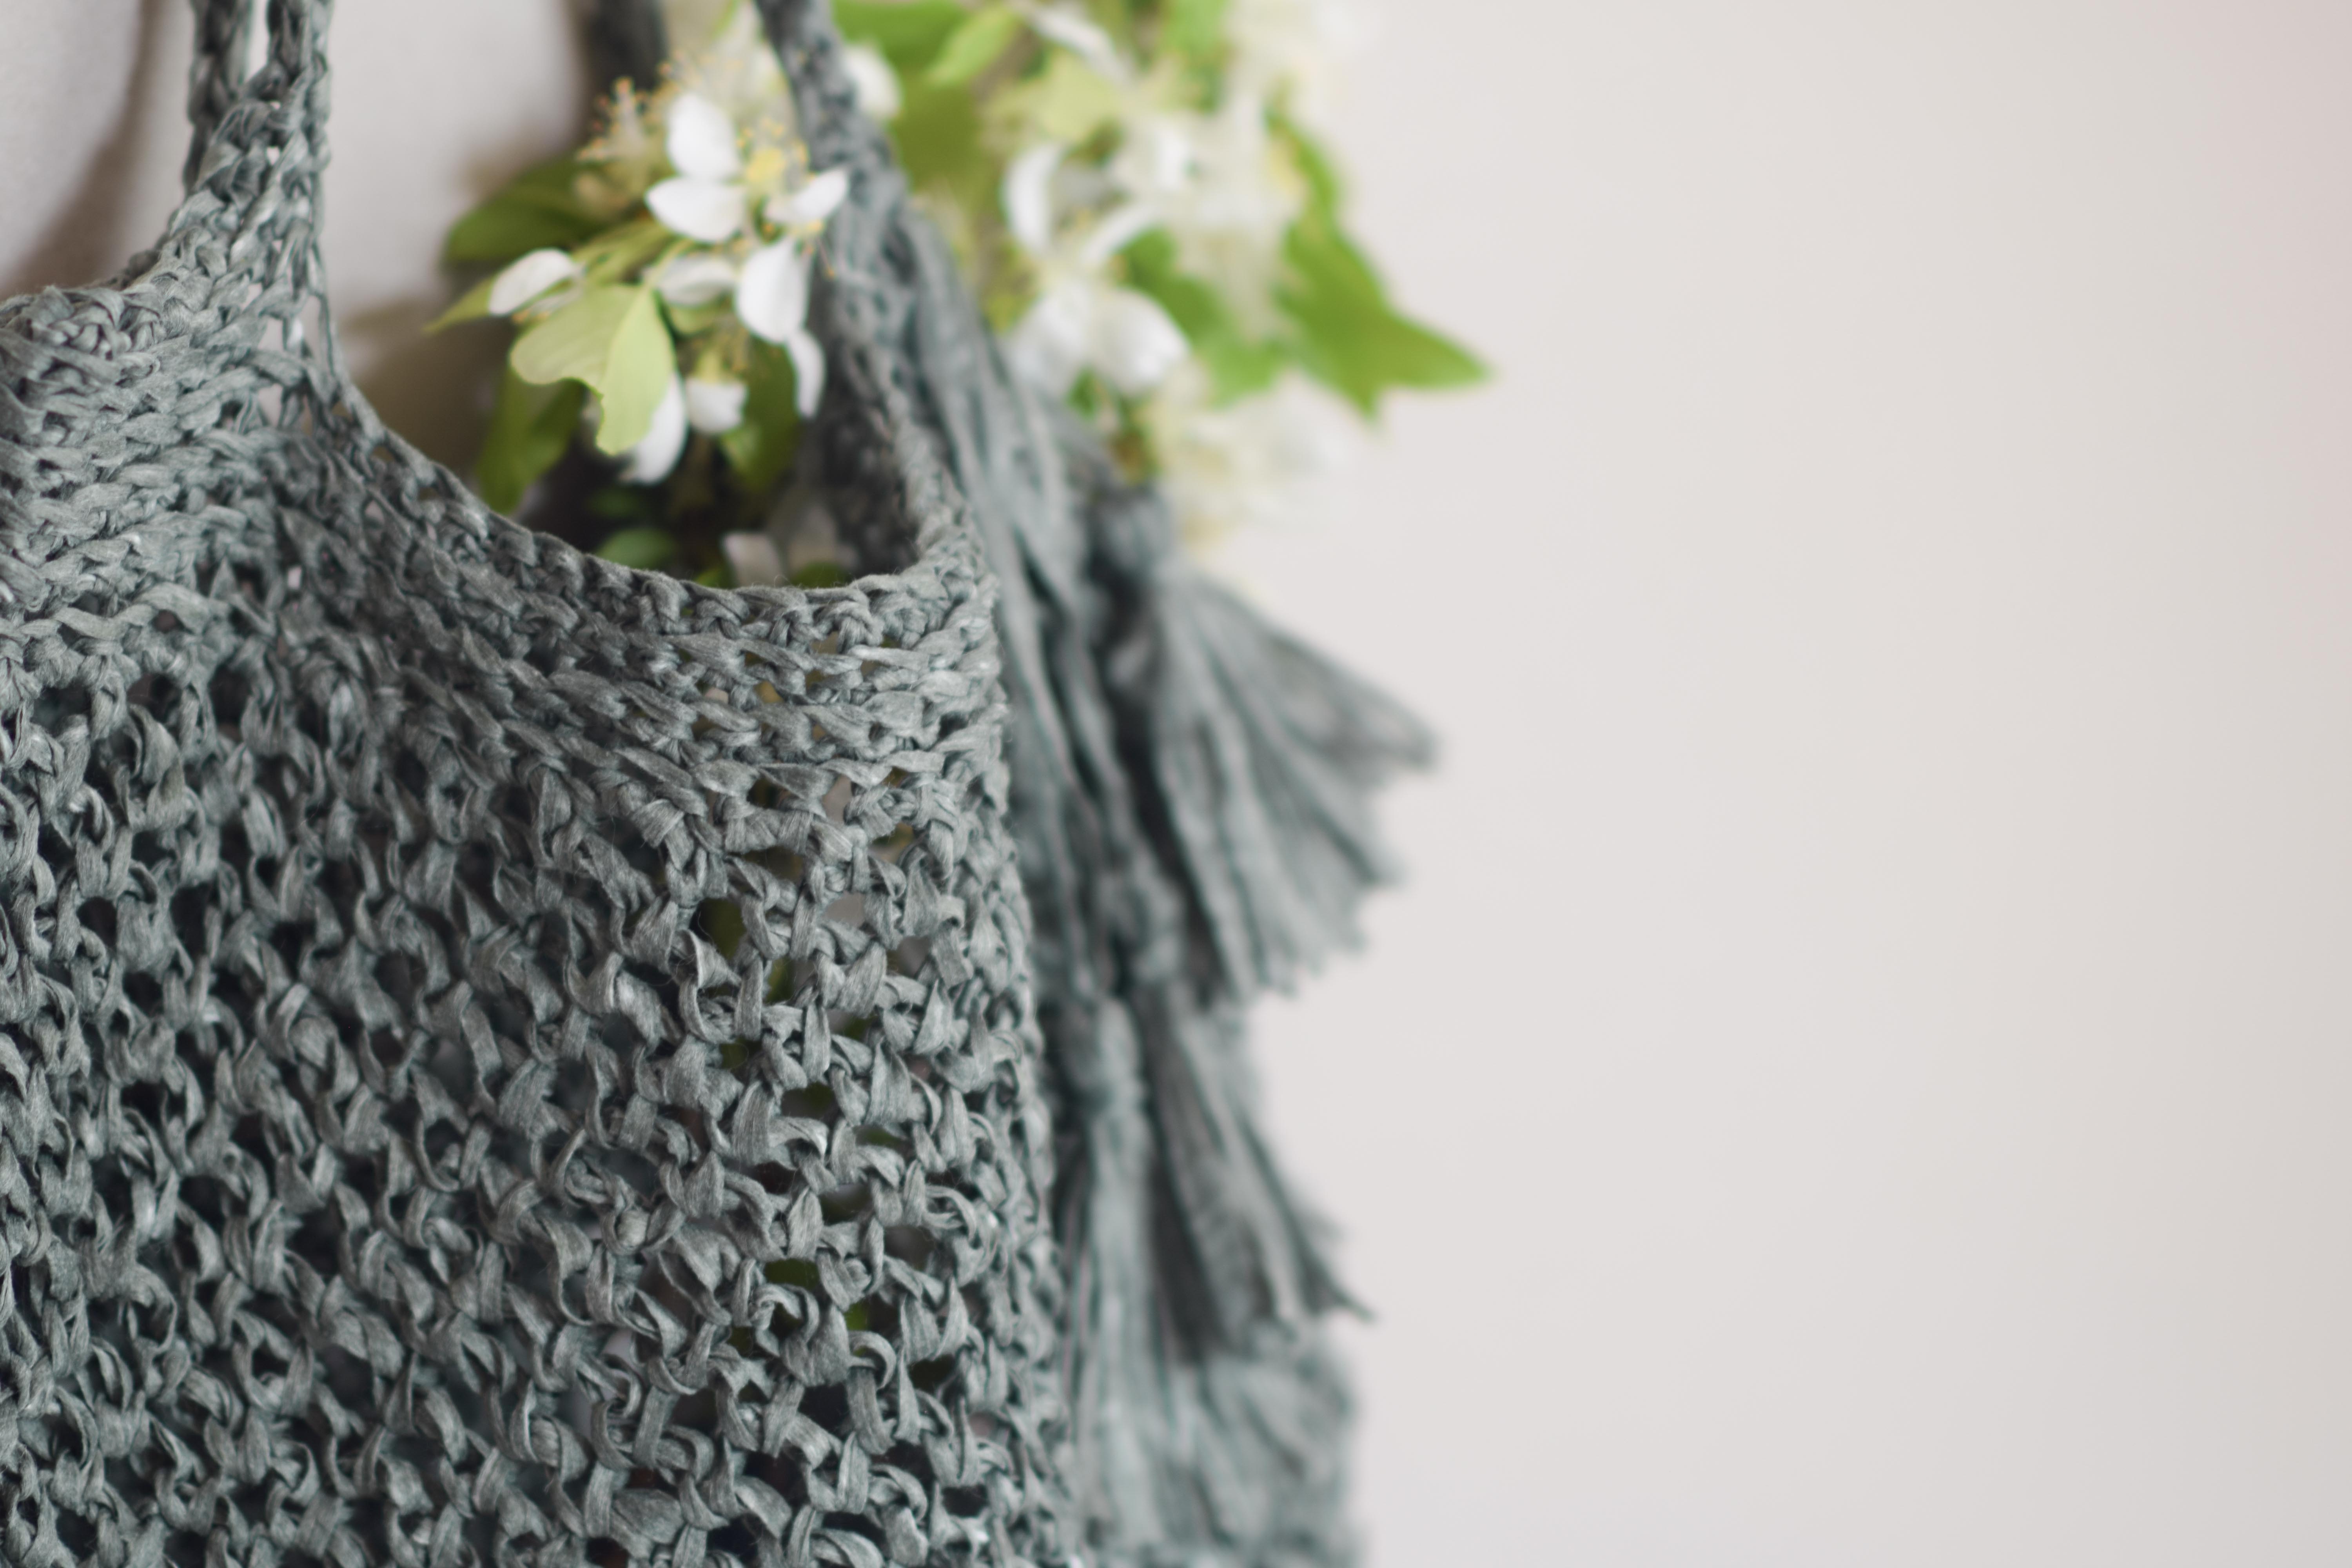 Crochet Market Tote Bag